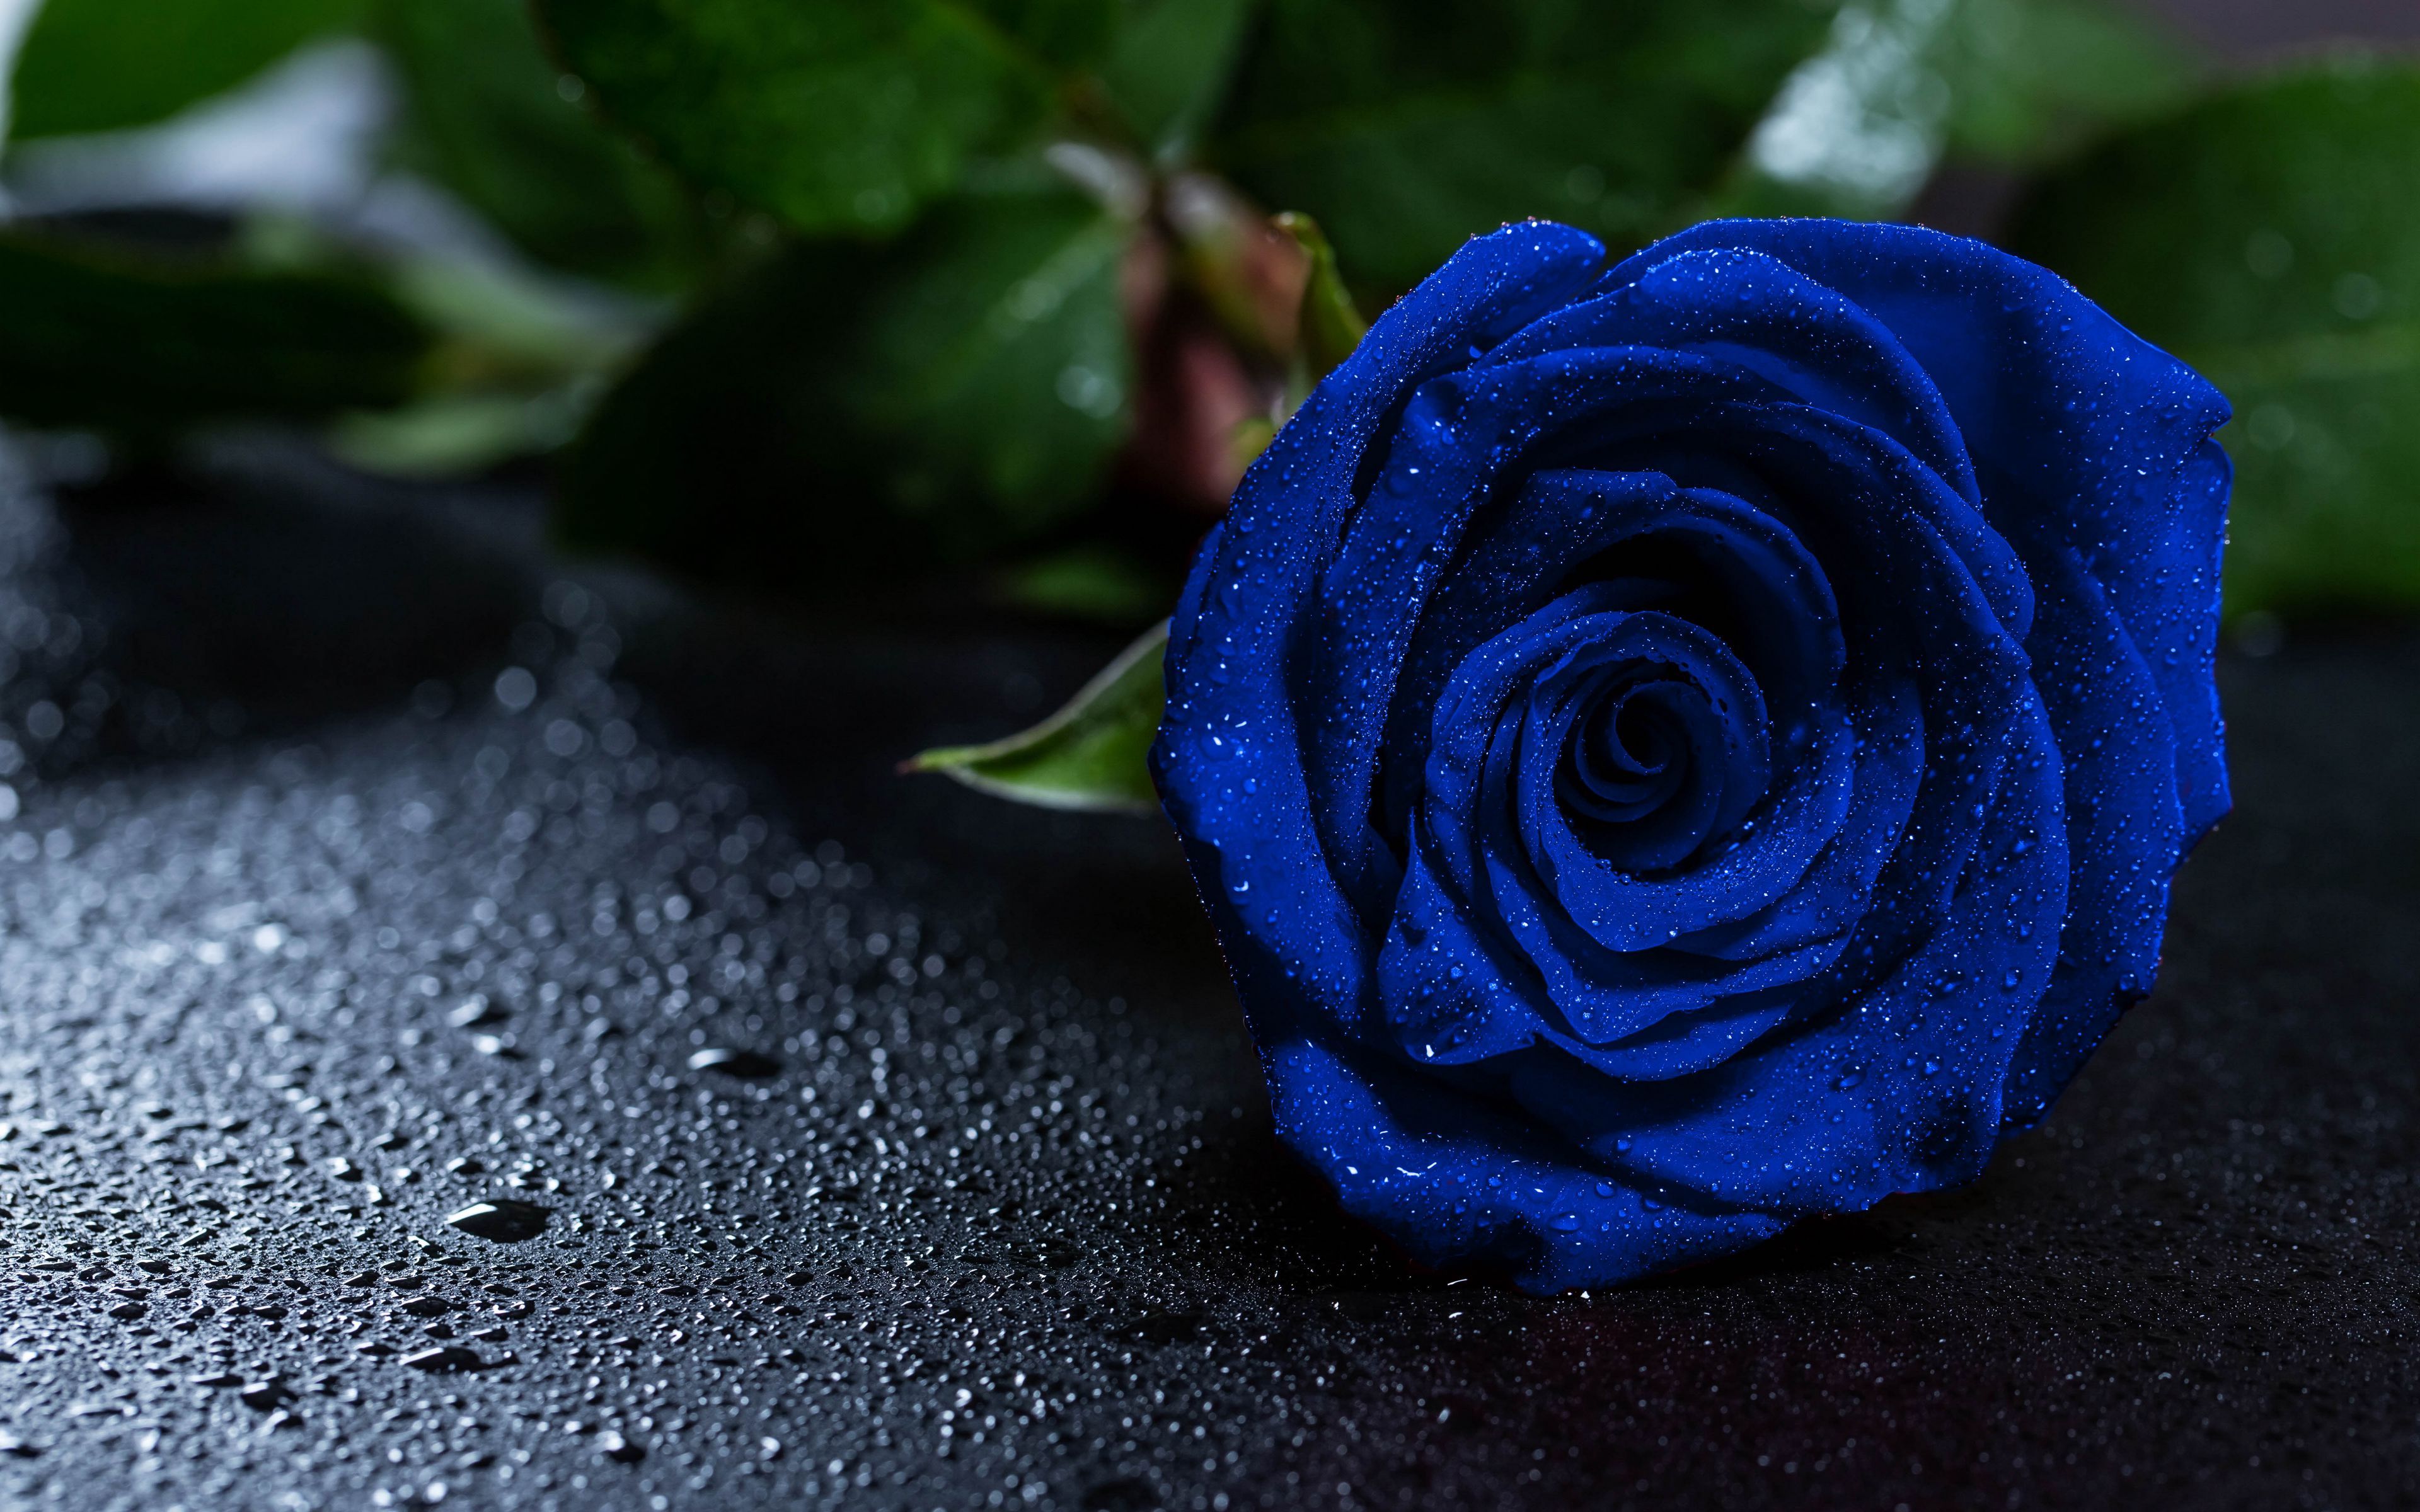 Download wallpaper 3840x2400 rose, blue rose, drops, bud 4k ultra HD 16:10 HD background